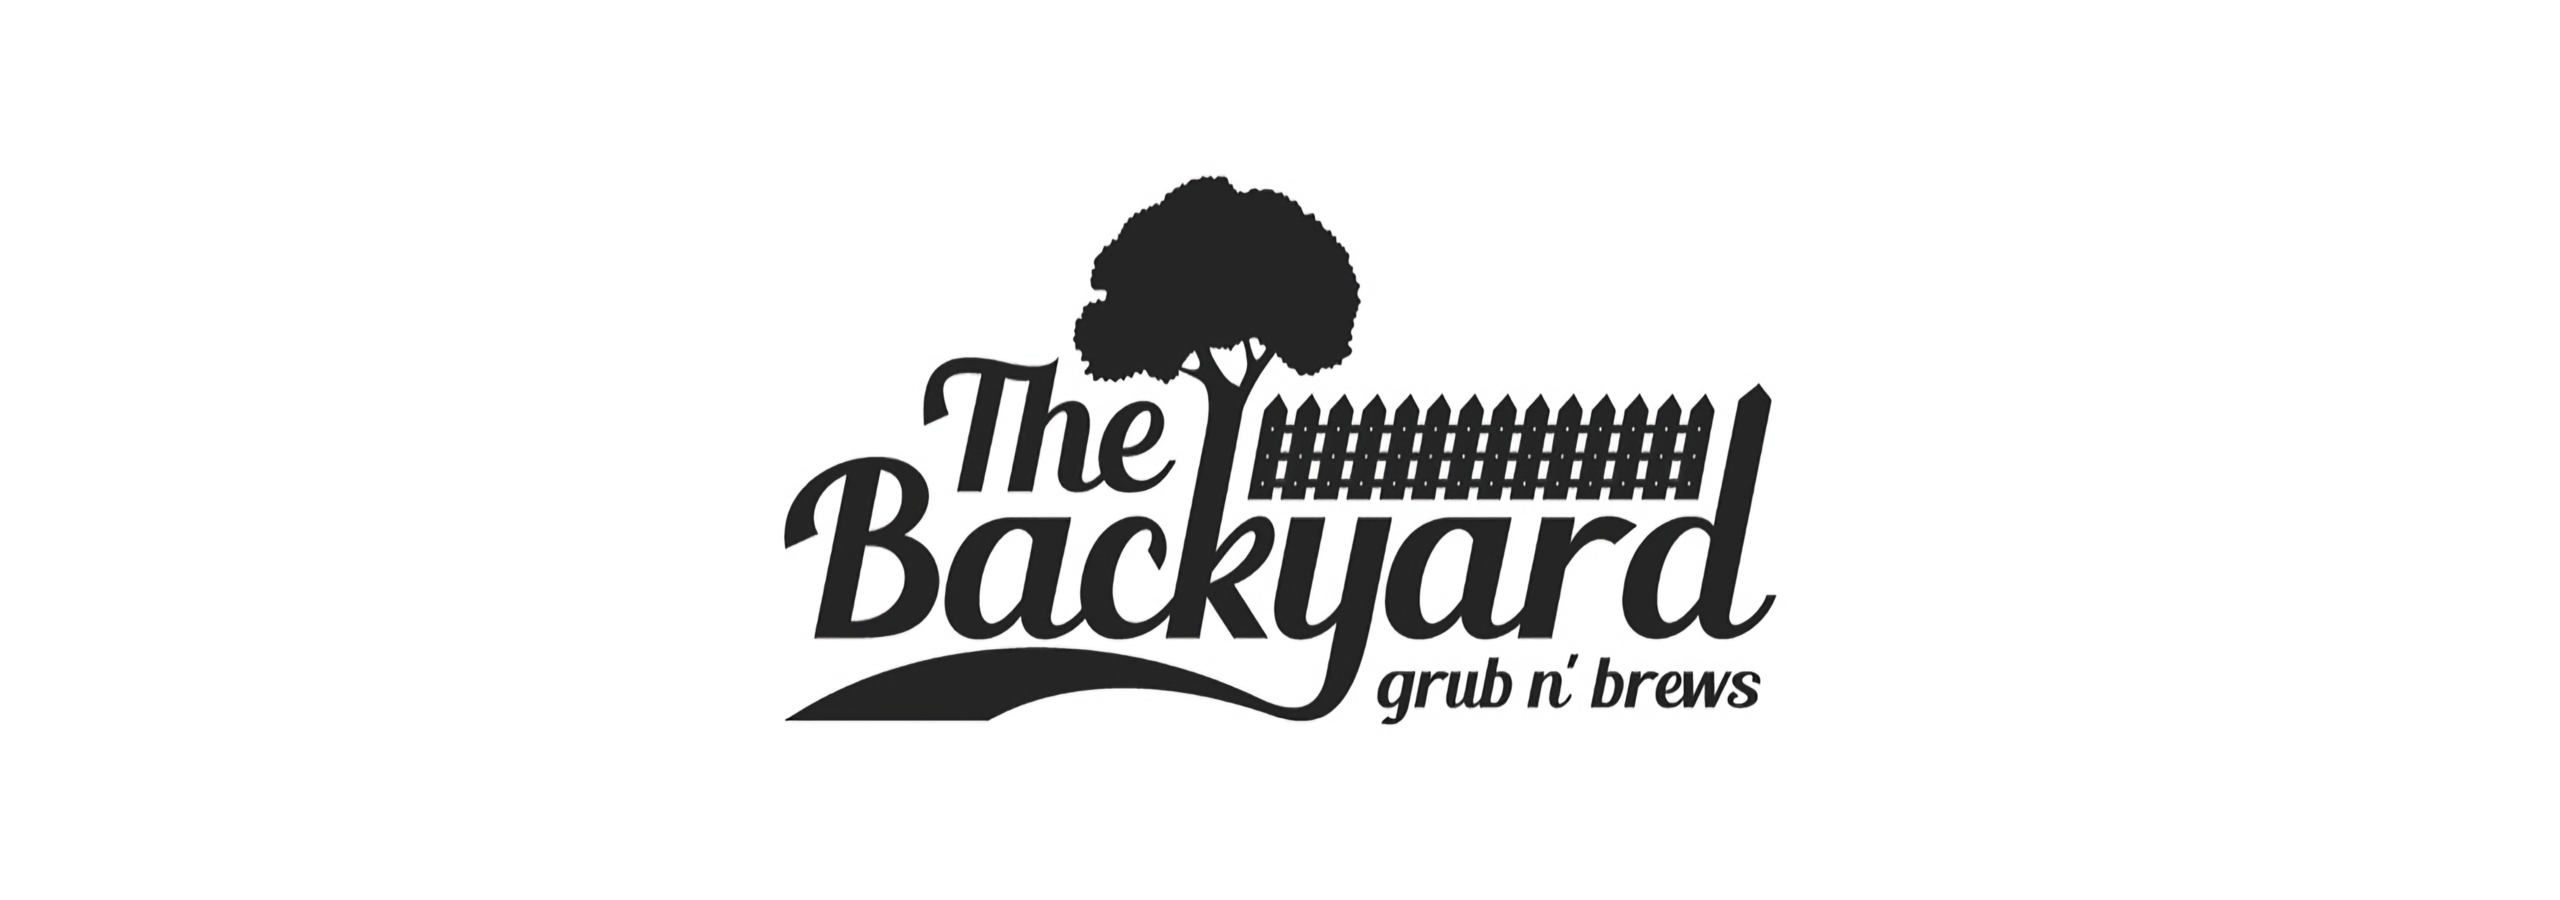 The Backyard Grub N’ Brews